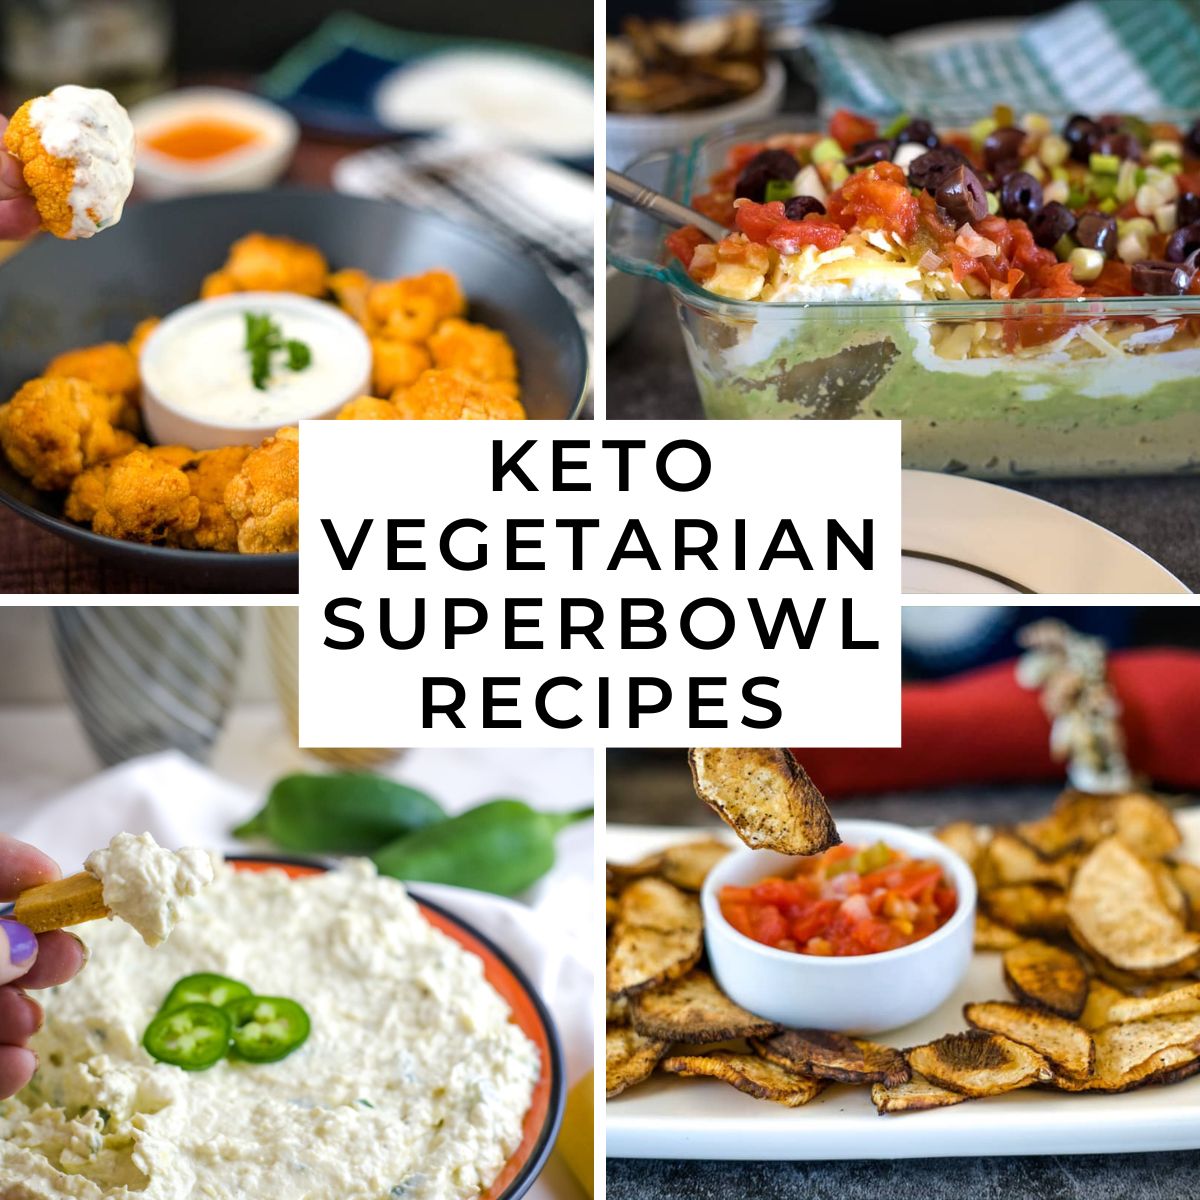 Keto Vegetarian Super Bowl Recipes - Keto Low Carb Vegetarian Recipes